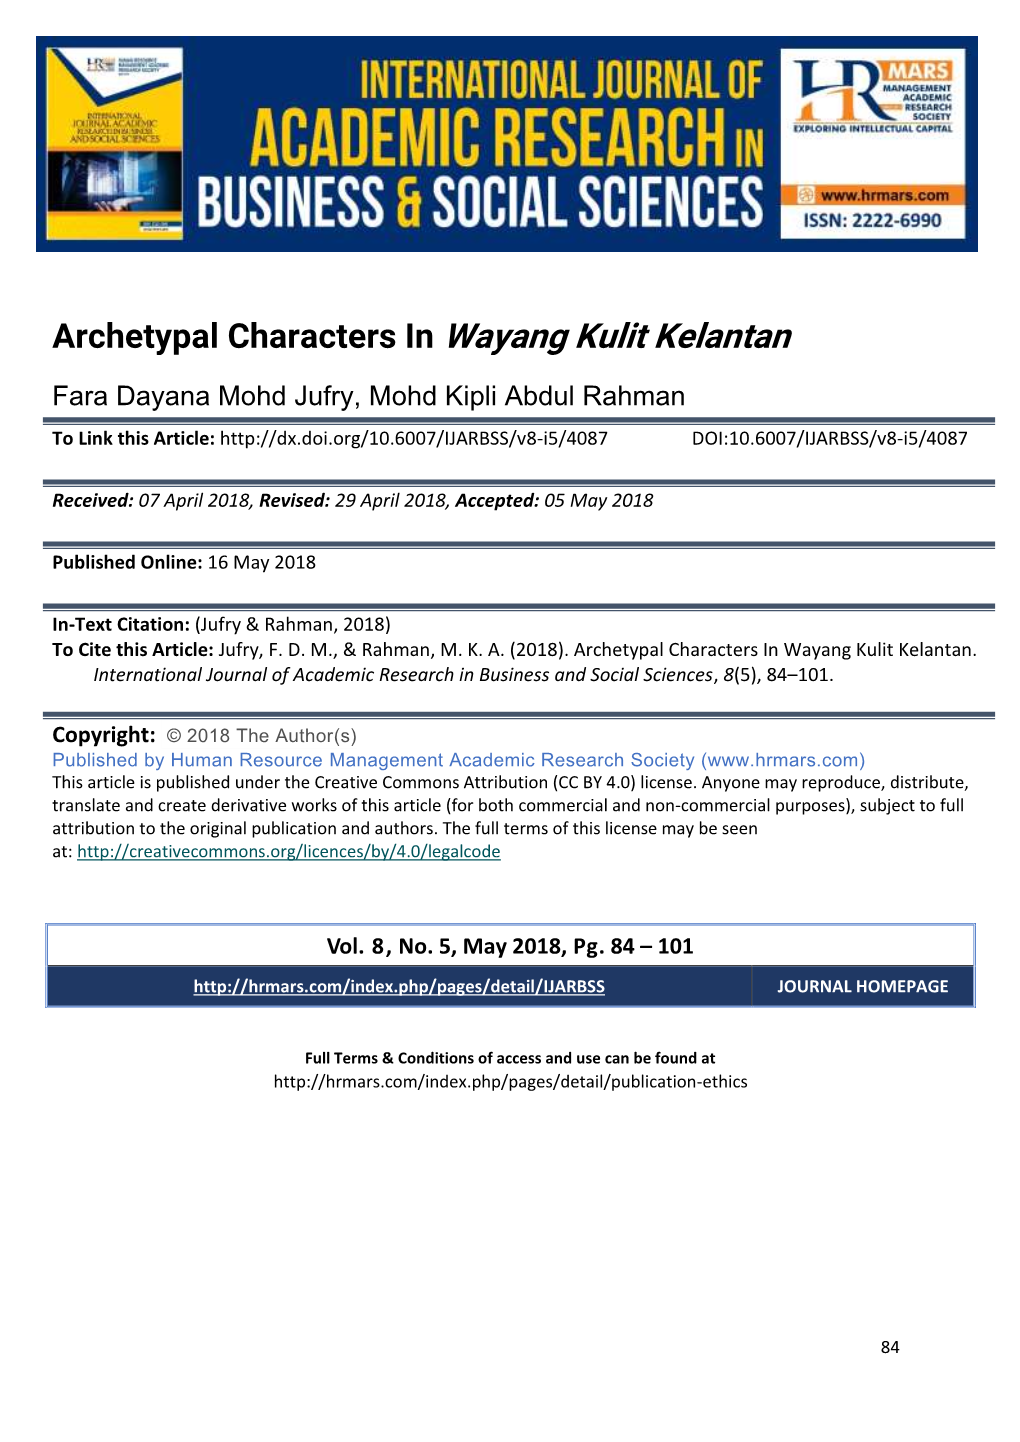 Archetypal Characters in Wayang Kulit Kelantan